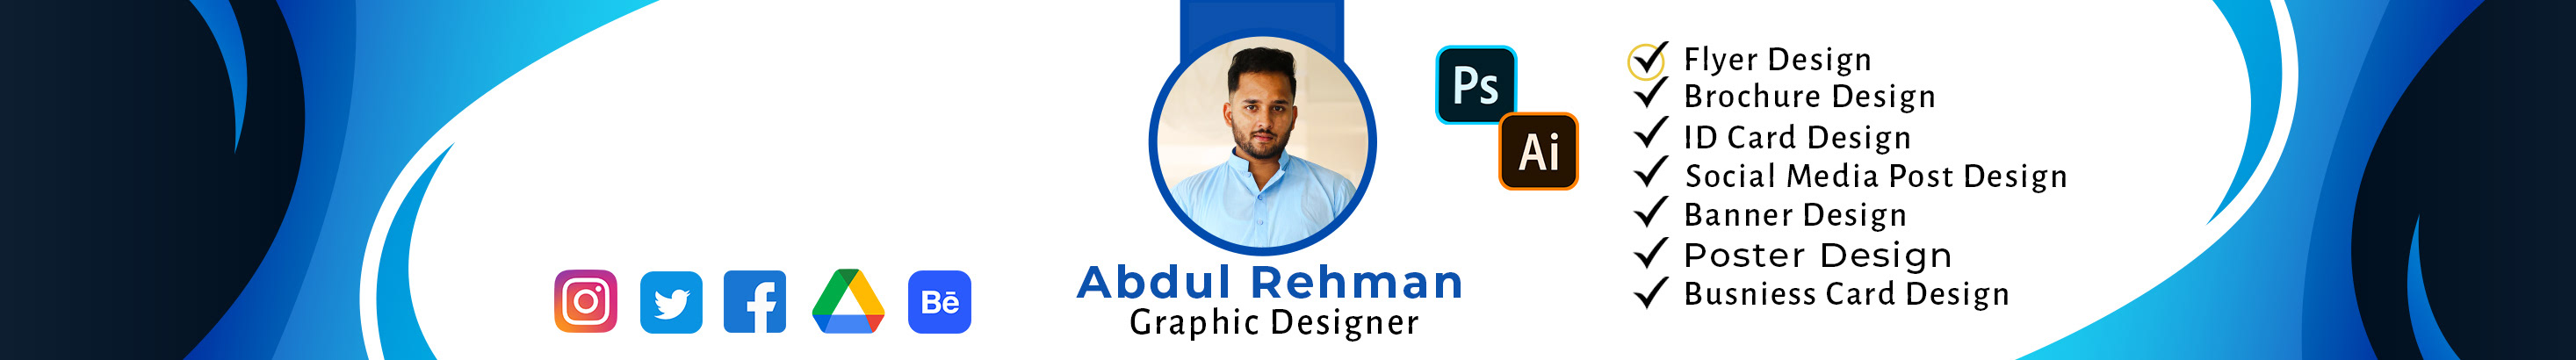 Abdul rehman's profile banner